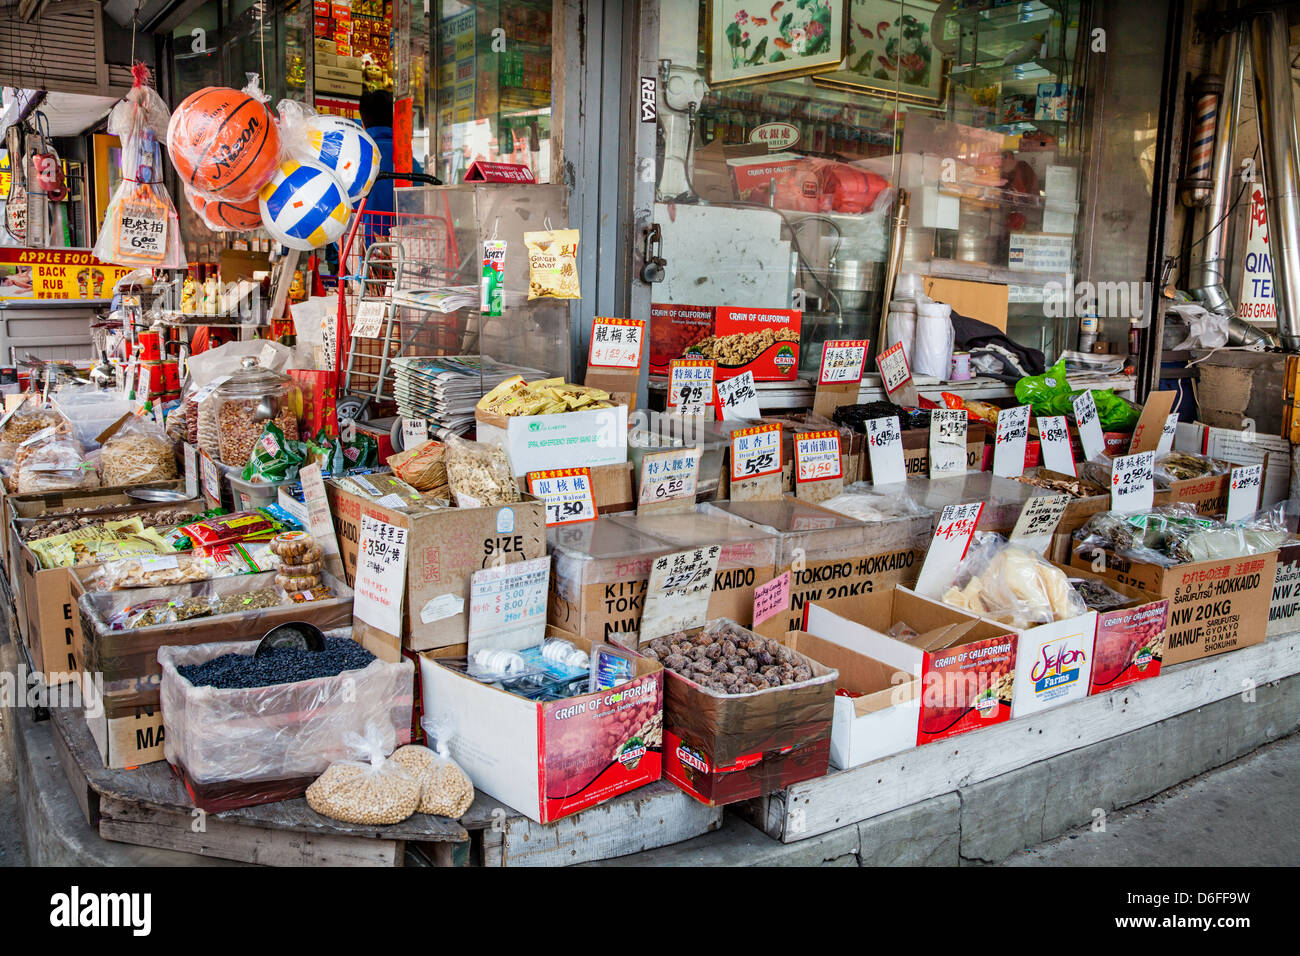 Strano alimenti su display, Mott Street, Chinatown, New York City Foto Stock